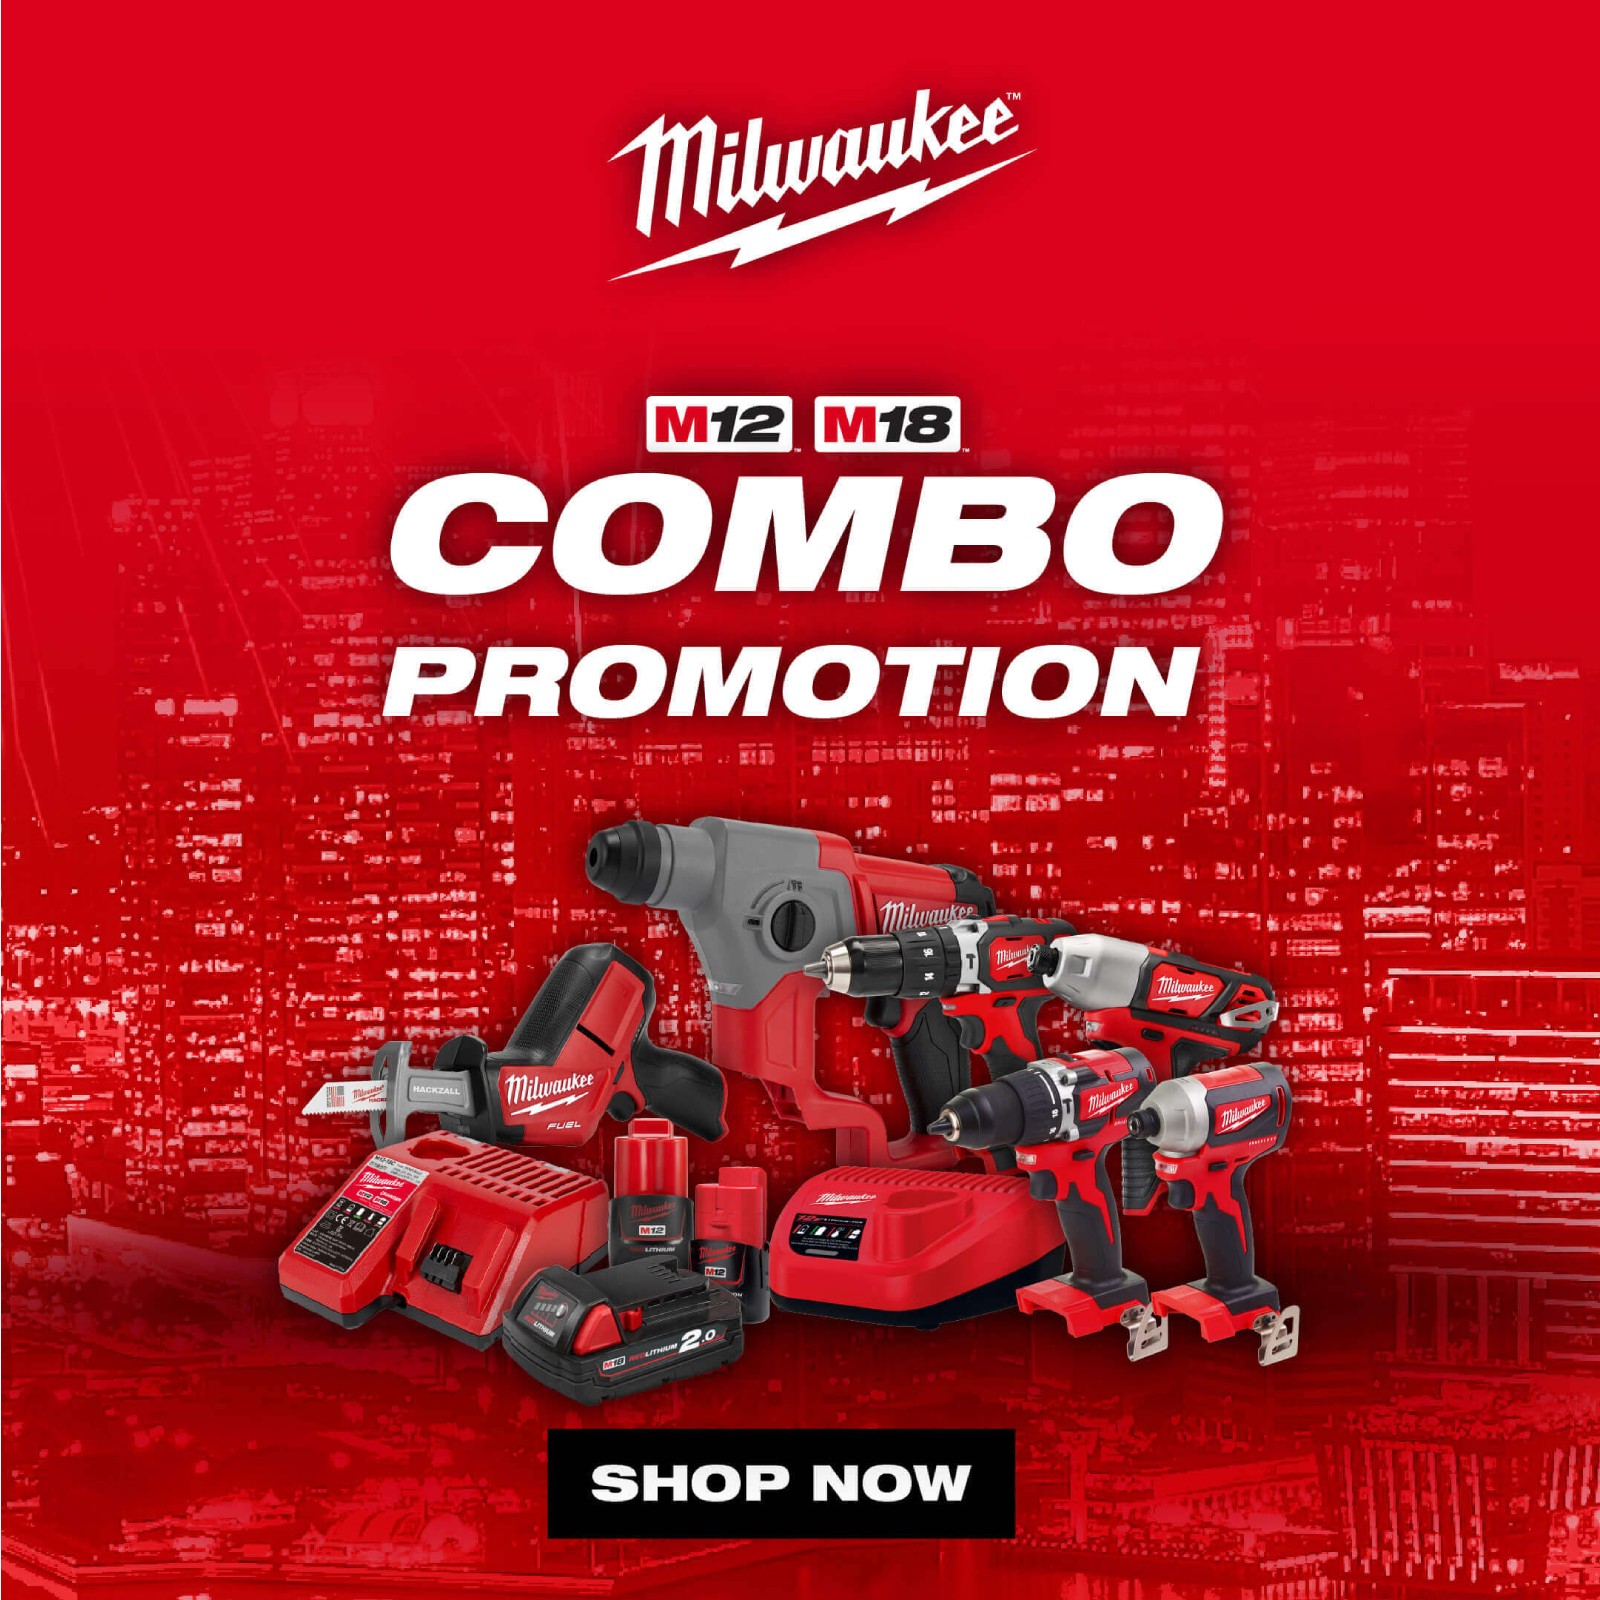 milwaukee-m12-promotion-cheap-collection-save-52-jlcatj-gob-mx